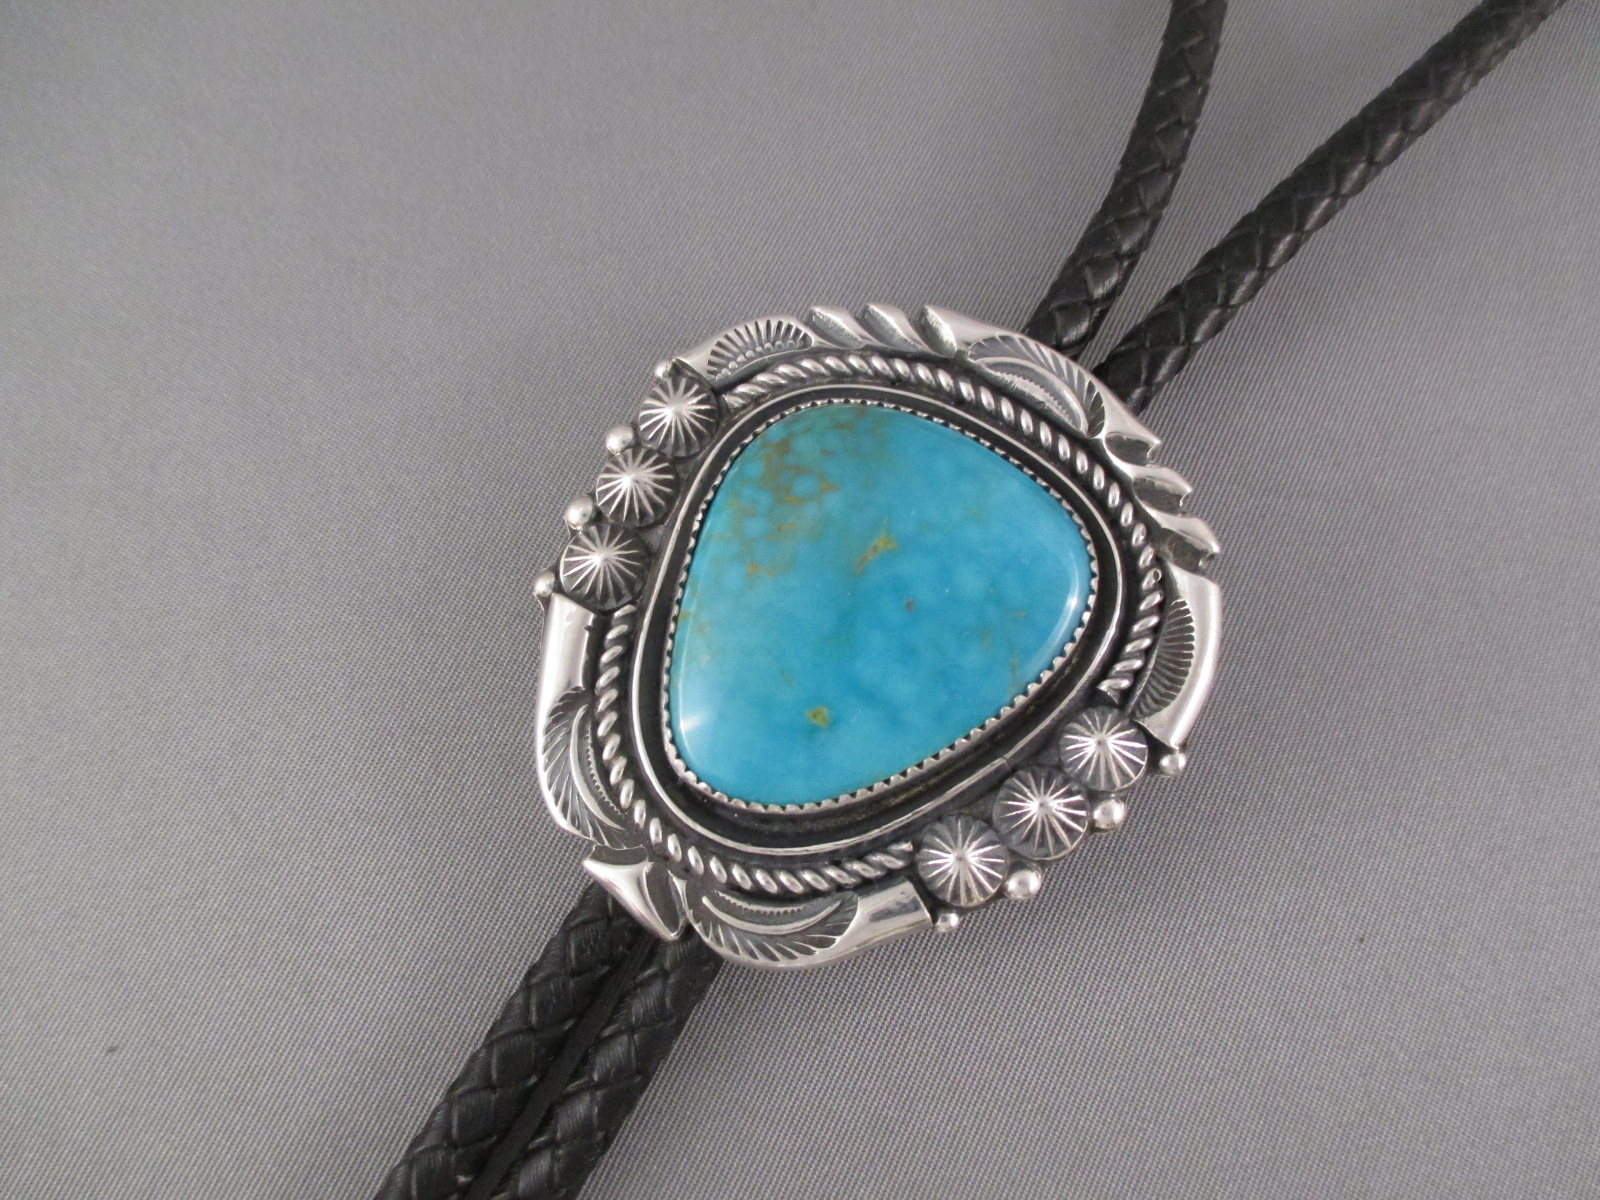 Kingman Turquoise Bolo Tie by Native American jewelry artist, Jeanette Dale $440-